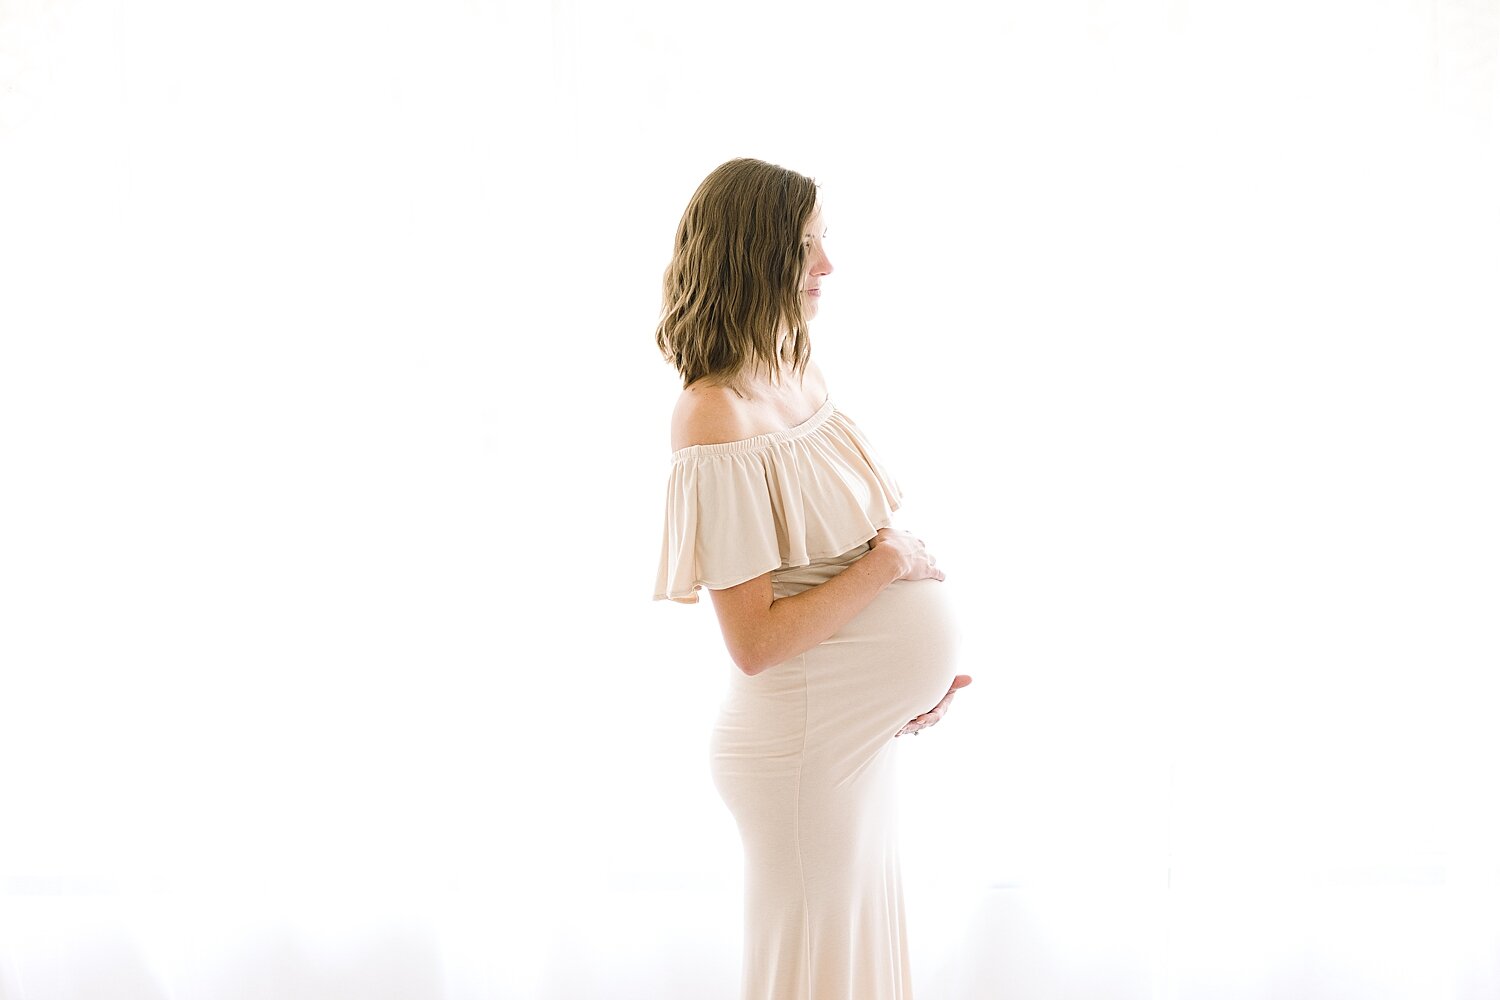 Studio maternity photography in Newport Beach, CA | Ambre Williams Photography